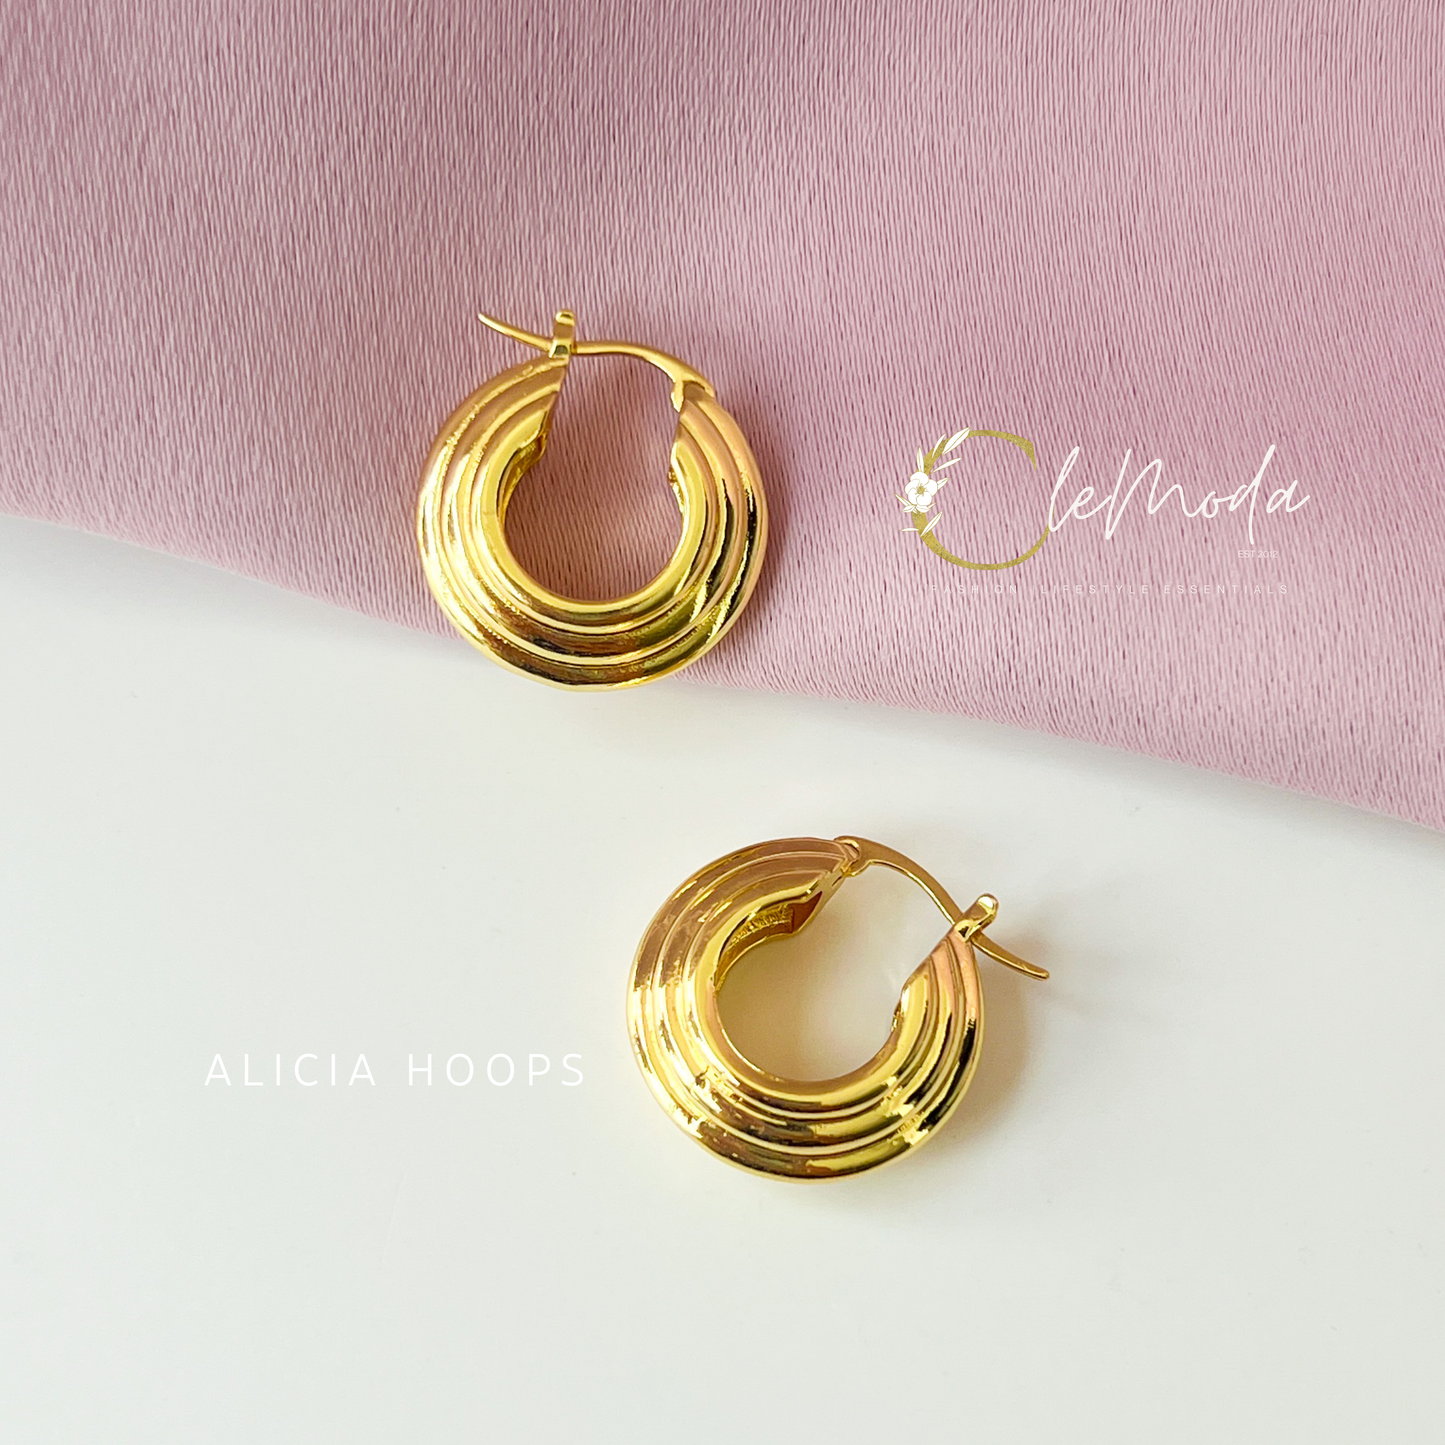 Alicia HOOPS Chunky Yellow Gold Earrings